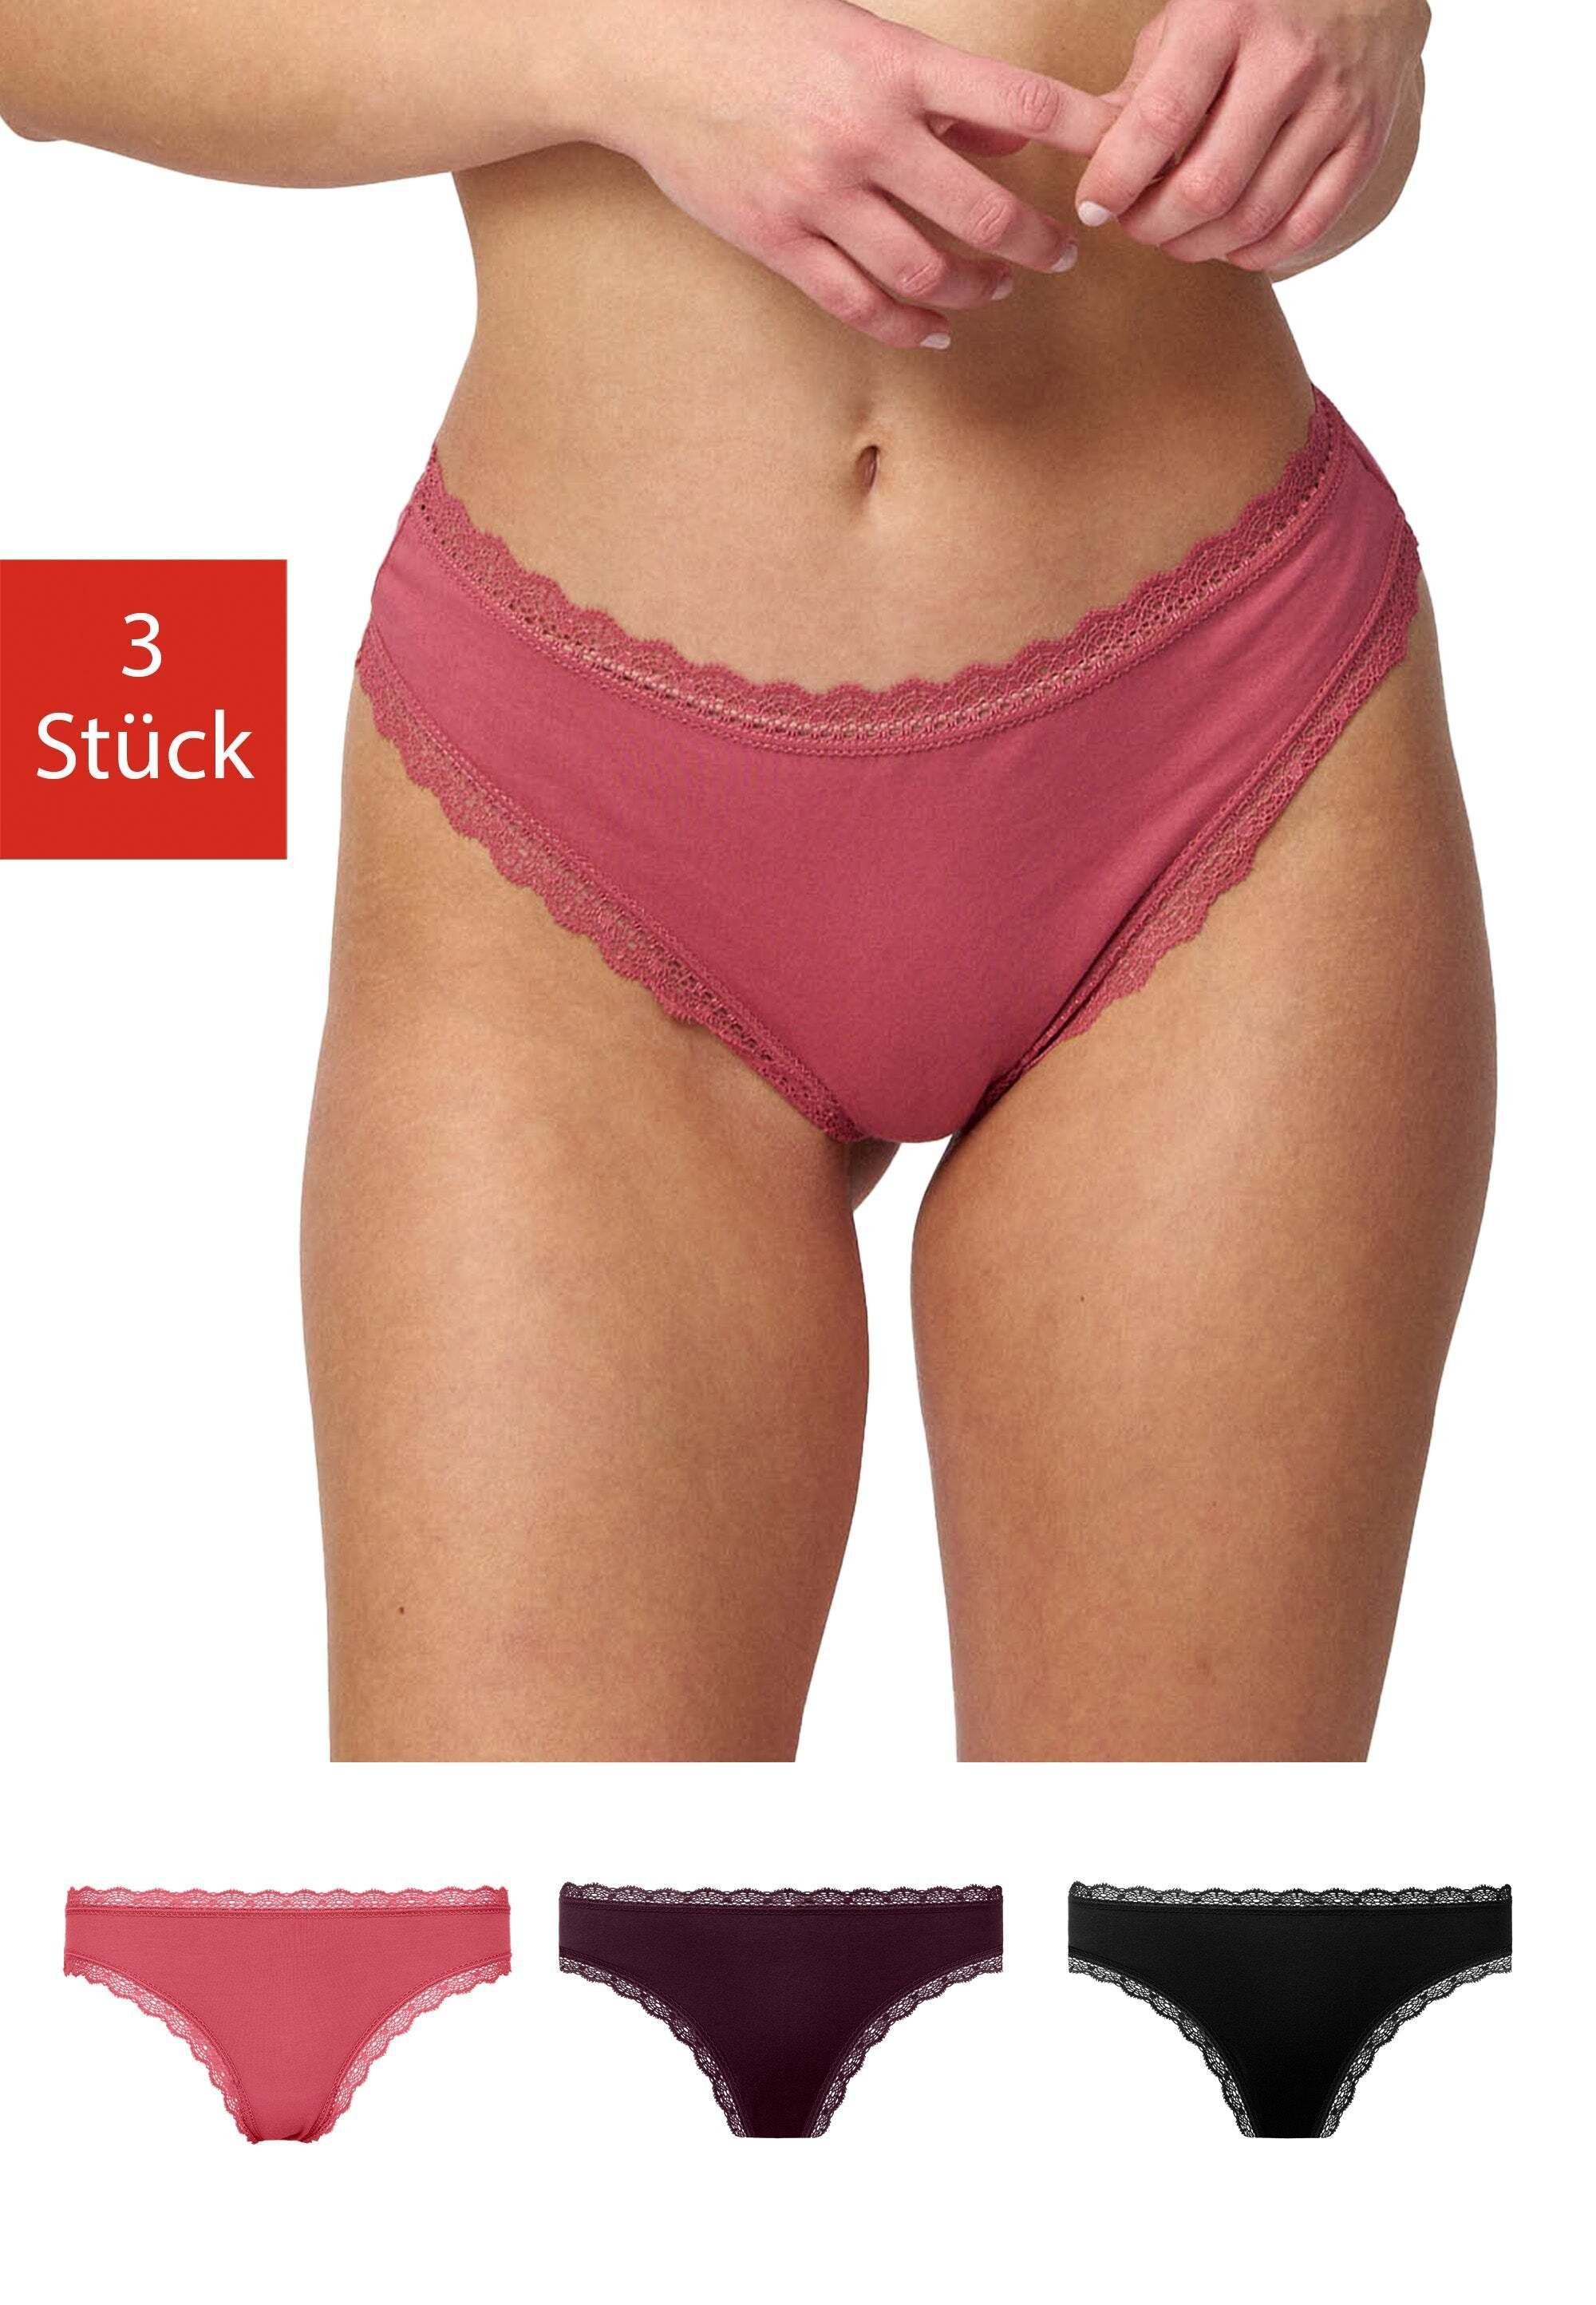 SNOCKS Tanga Unterwäsche Damen String Unterhosen Tanga (3-St) unsichtbar unter deiner Kleidung Mix (Mauve/Weinrot/Schwarz)